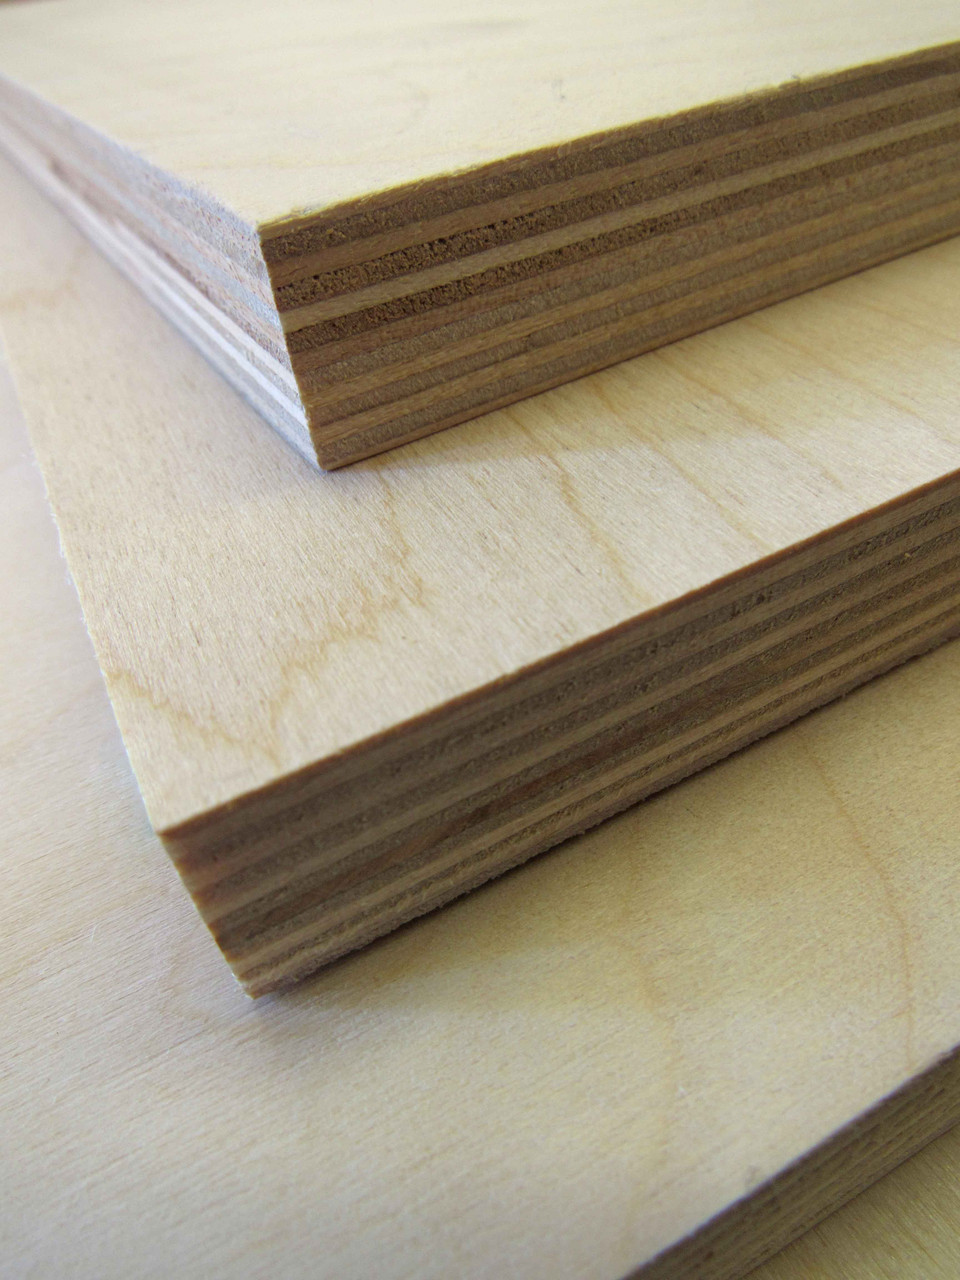 Baltic Birch Plywood Full Sheets 60x60 (5' x 5')